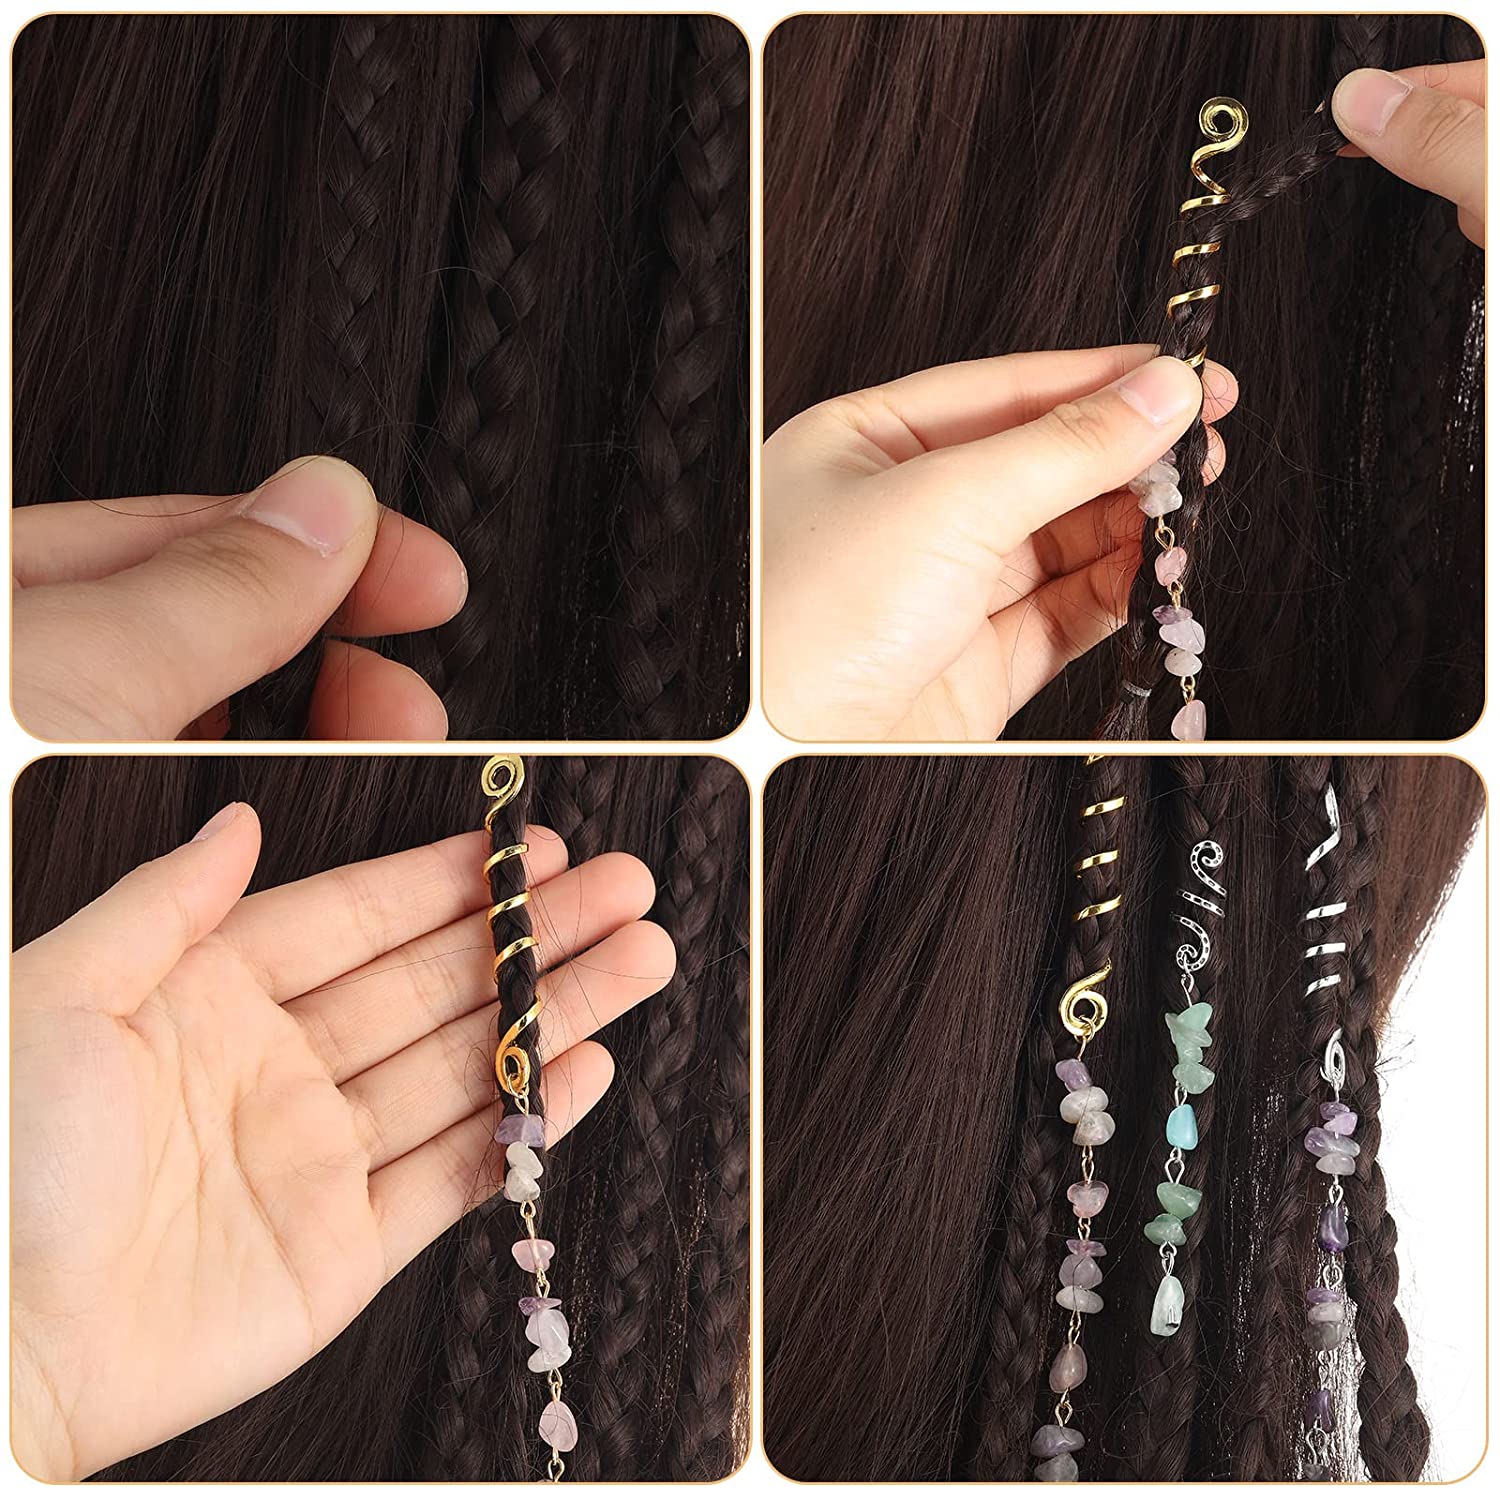 6 Pcs Braid Hair Accessories Celtic Hair Jewelry Alloy Dreadlock